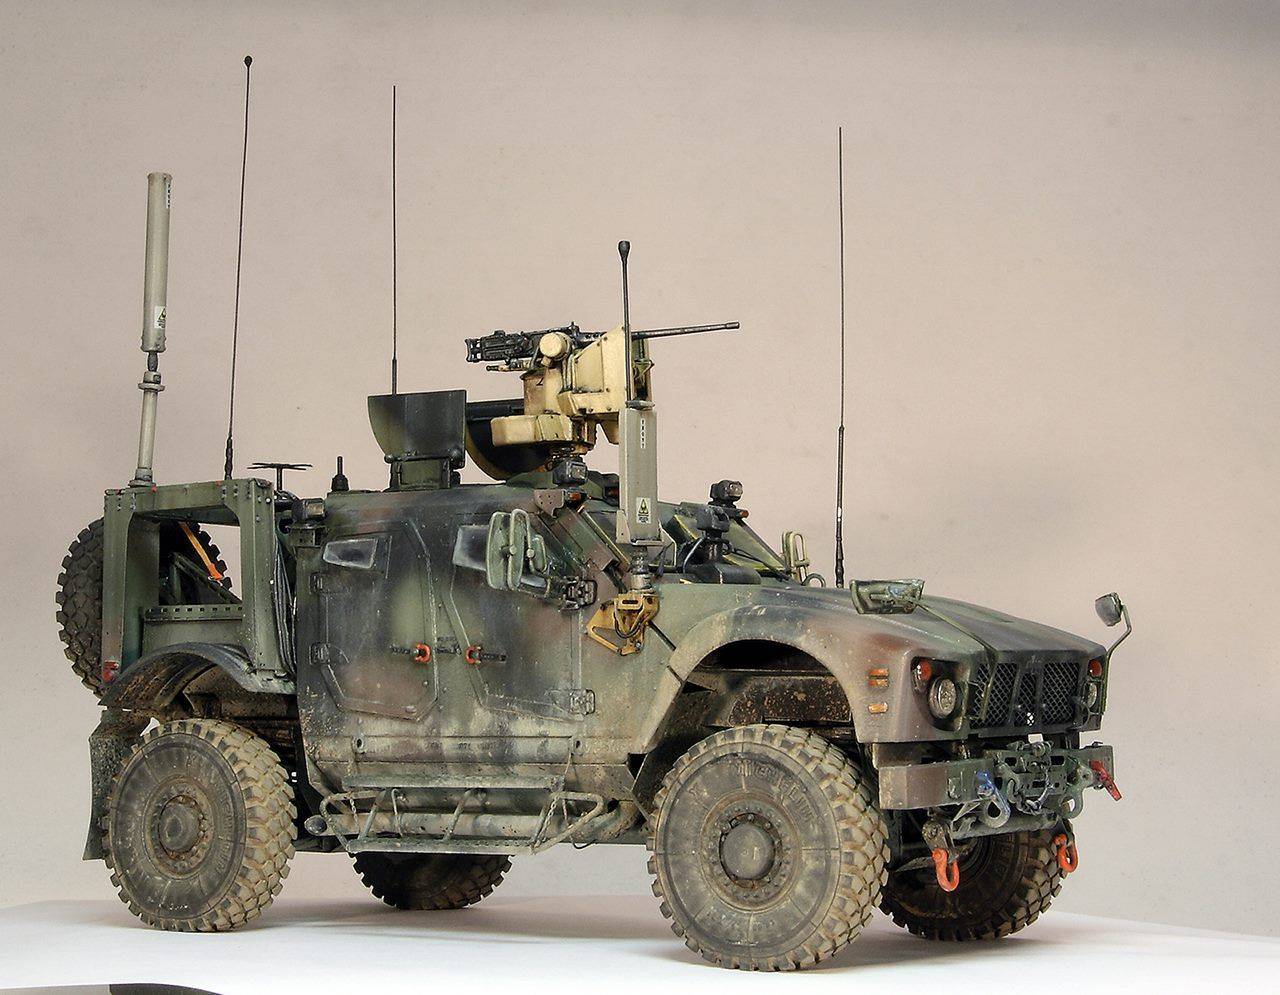 Oshkosh mrap all terrain vehicle - army technology